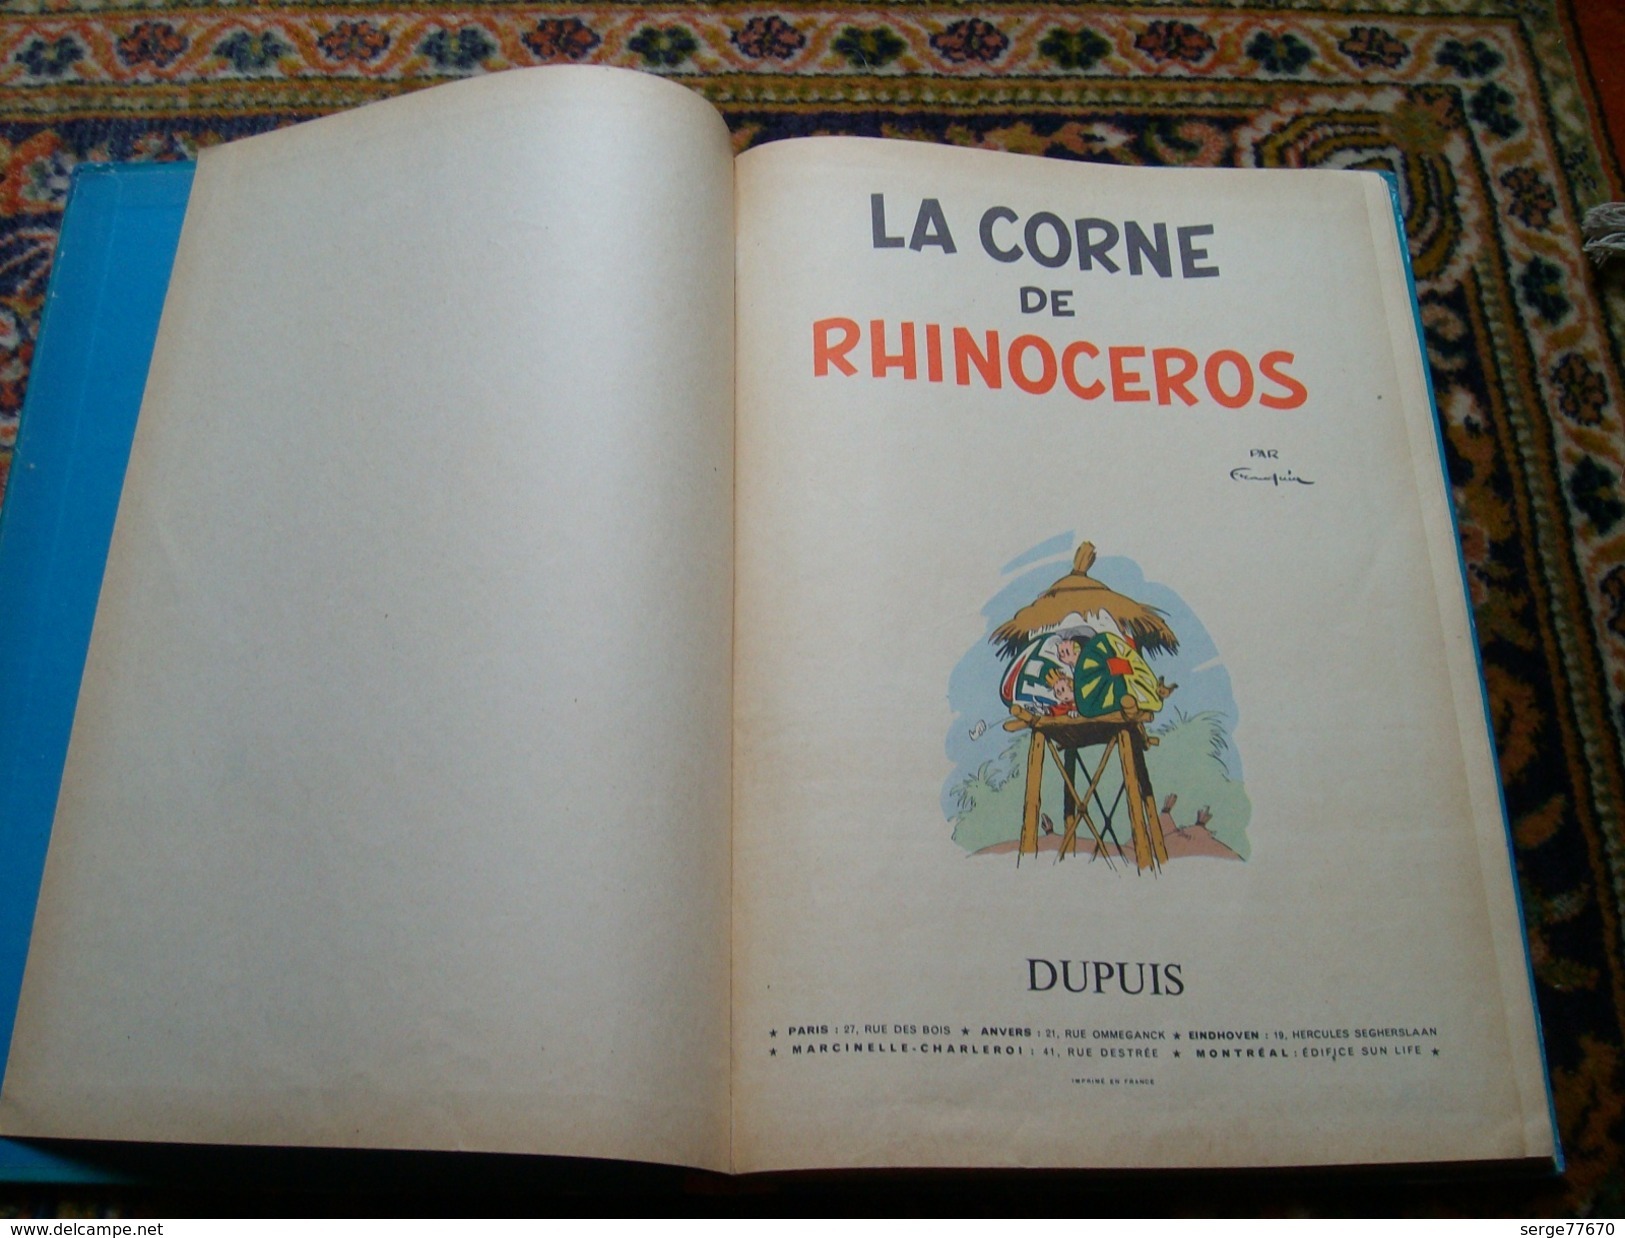 Spirou et Fantasio Franquin la corne de rhinocéros 1955 turbot-rhino édition originale française eo Dupuis